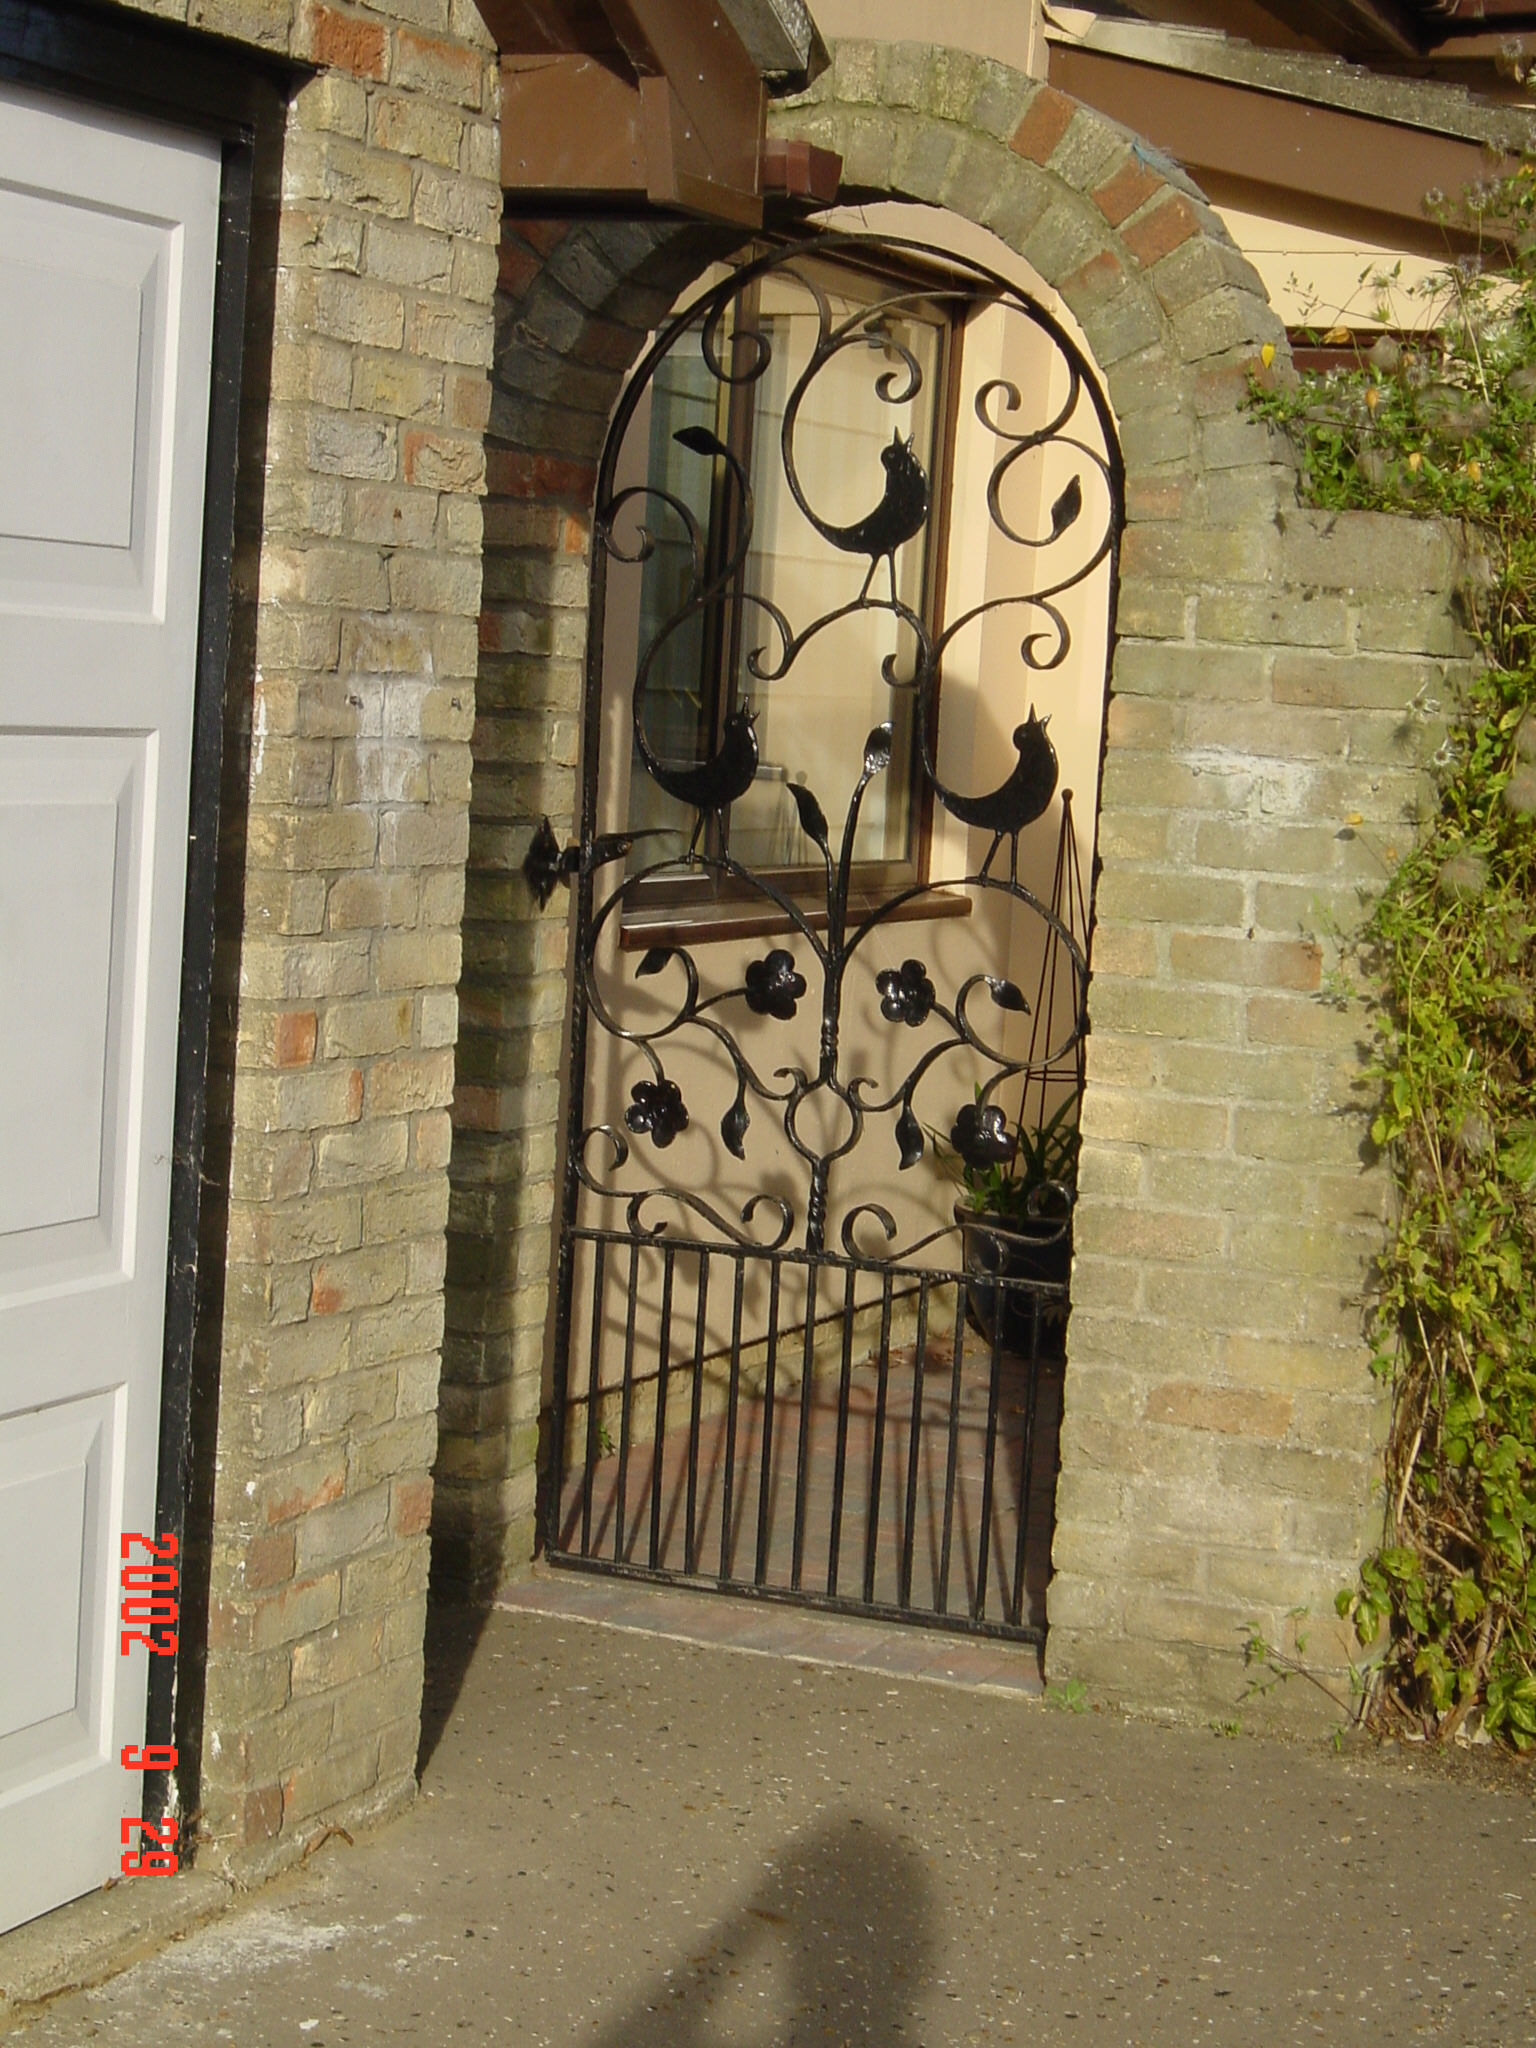 Side Gates and garden gates, gedding, bury st. edmunds, suffolk, UK.